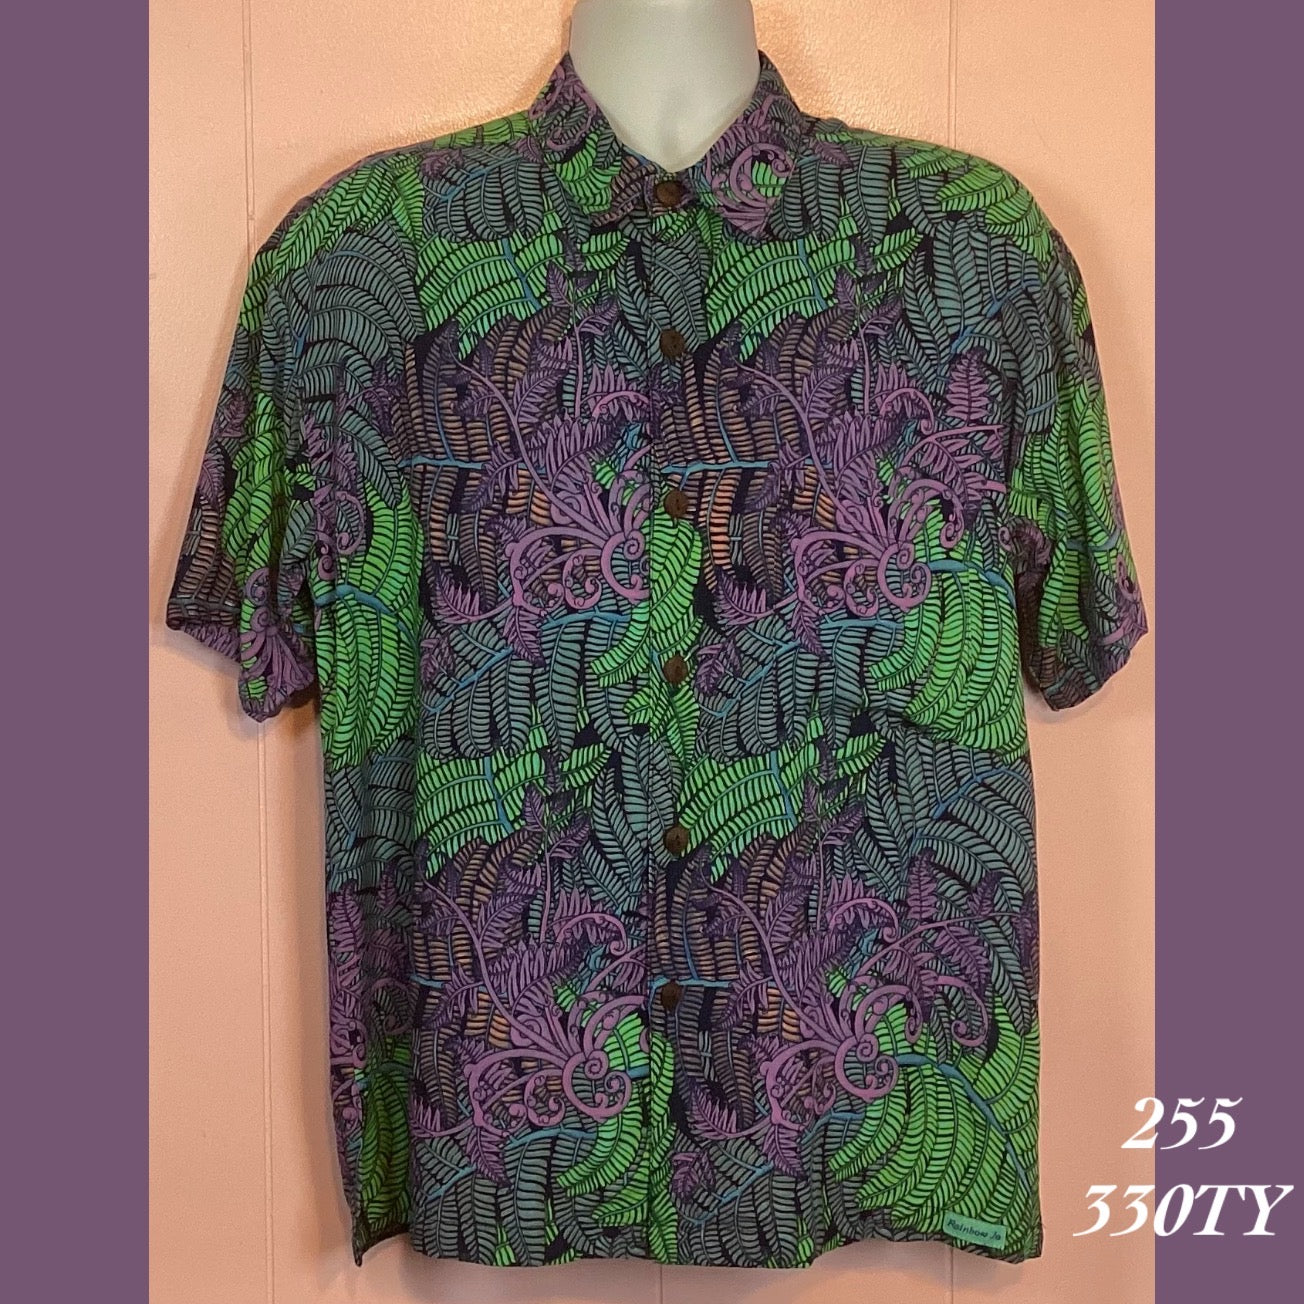 255 - 330TY , Men's Aloha shirt